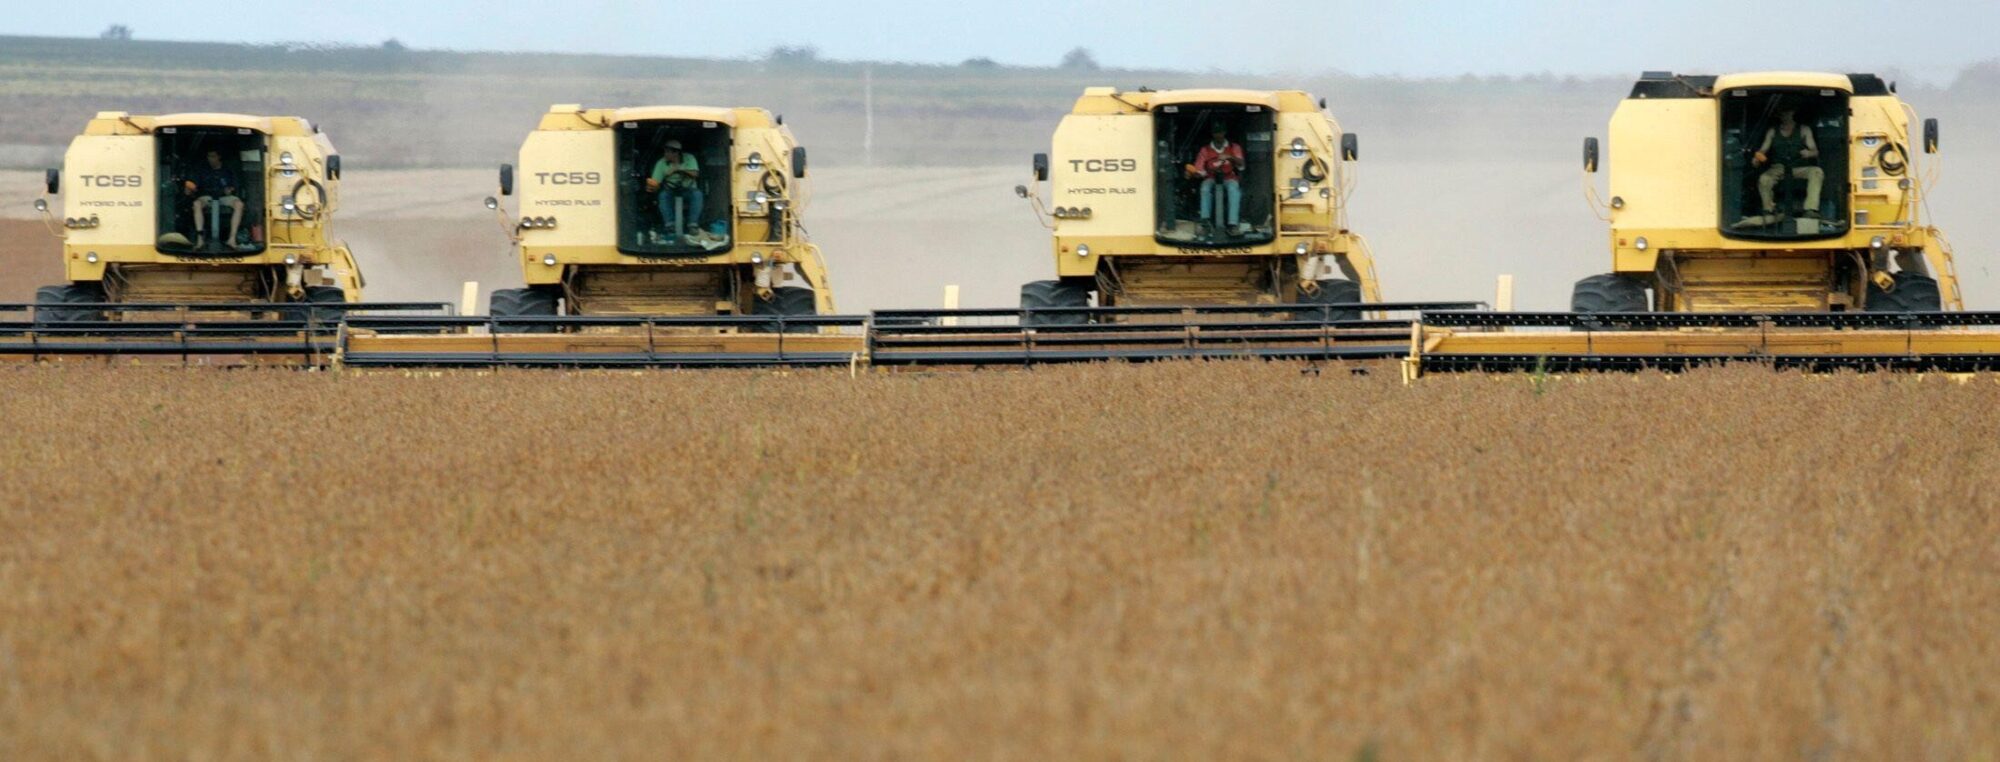 soybean harvesters in brazil